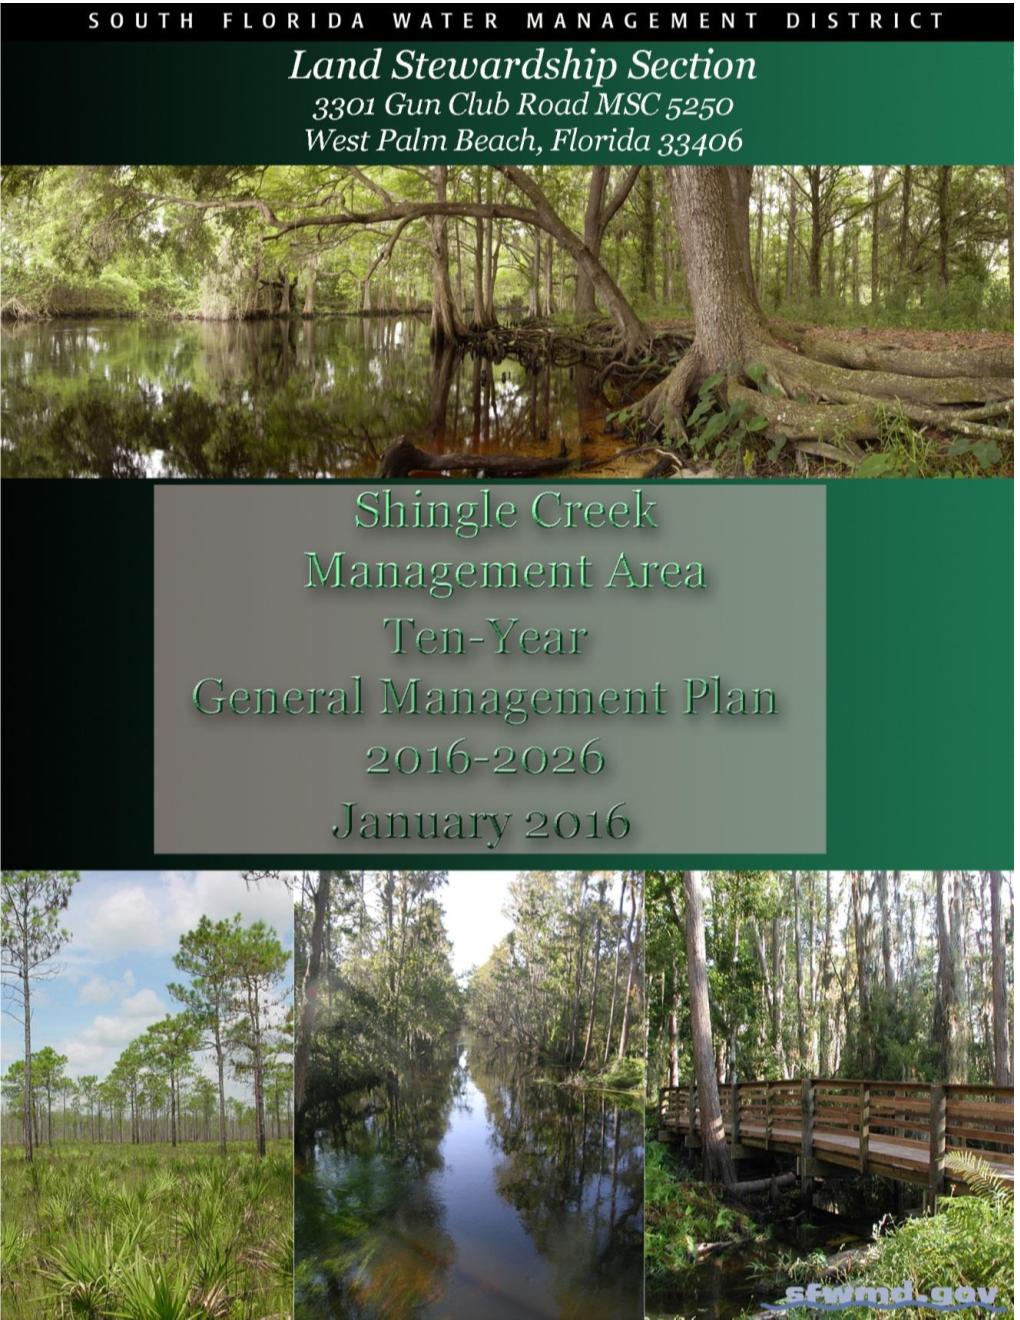 Shingle Creek Management Area (2016-2026)